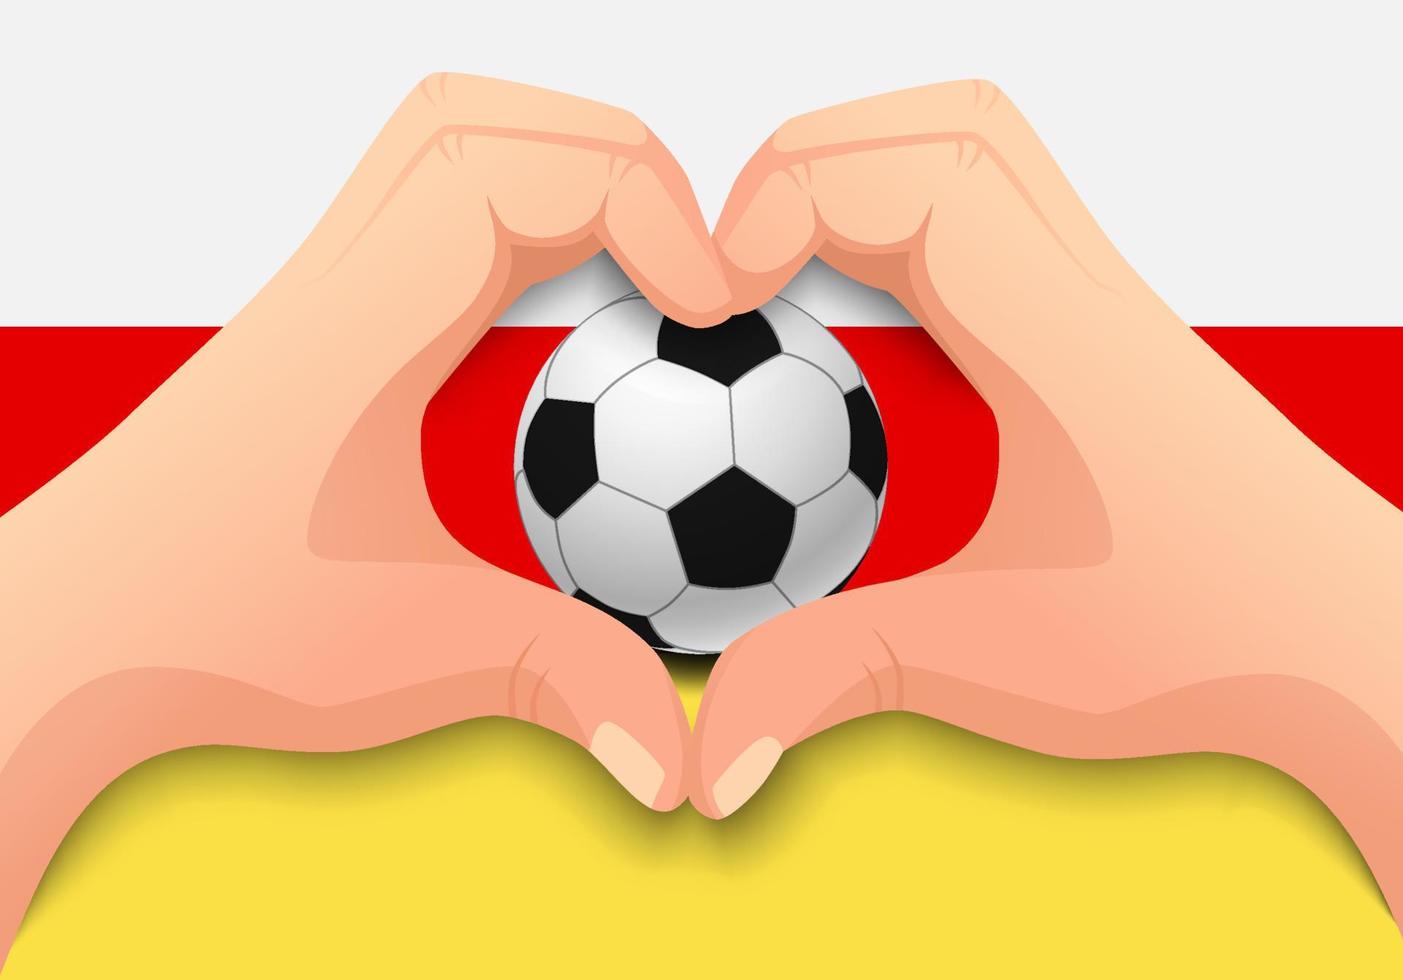 south ossetia soccer ball and hand heart shape vector